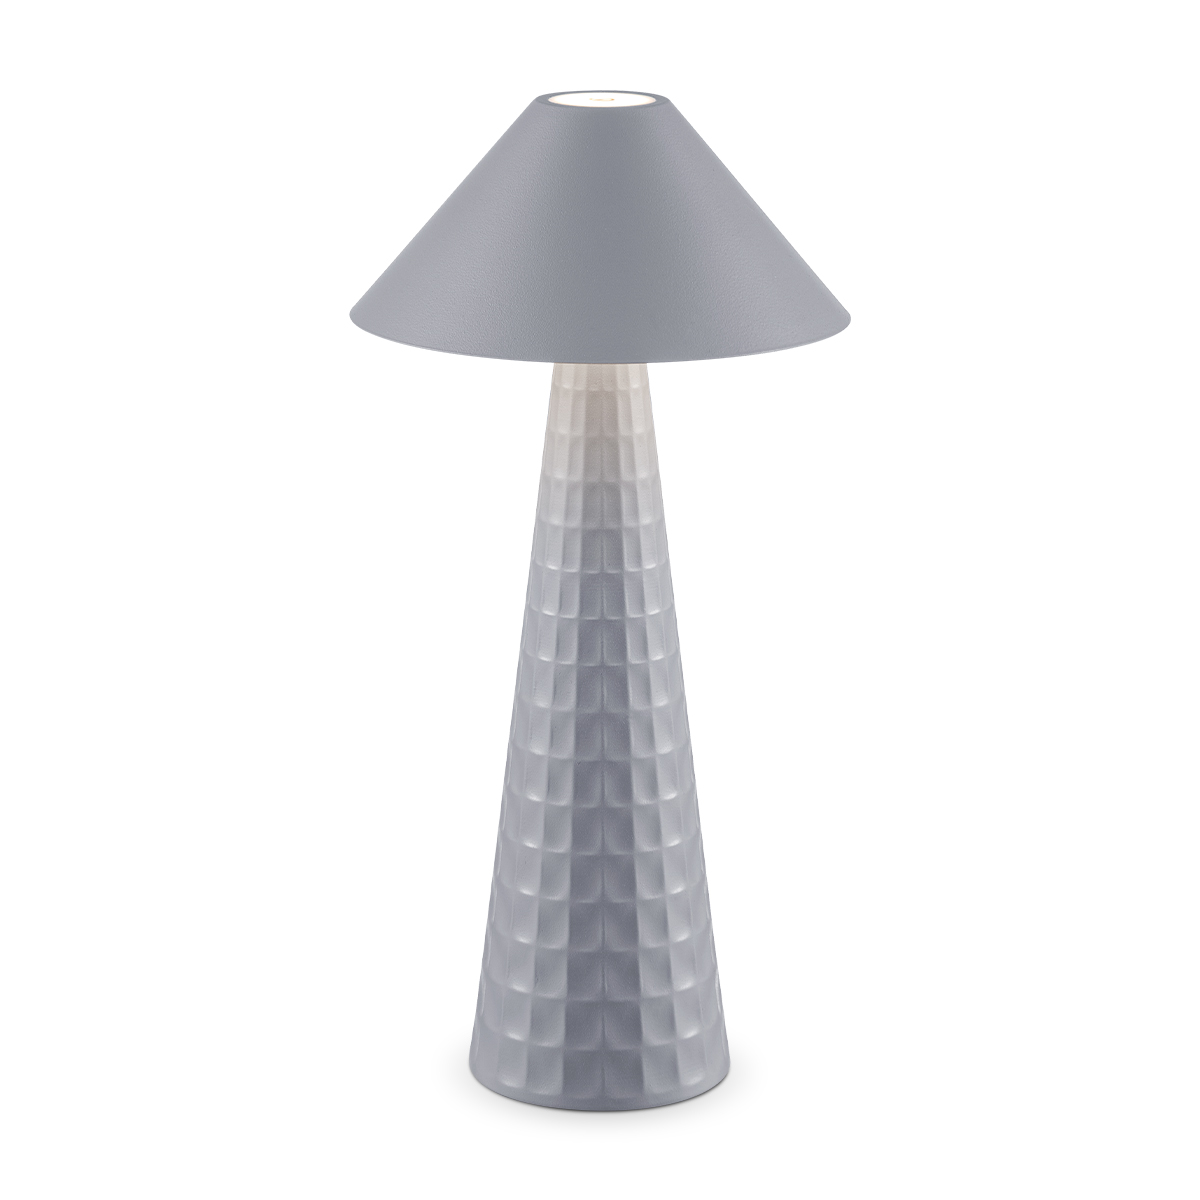 Tangla lighting - TLT7645-01GY - LED table lamp - rechargeable plastic and metal - grey - mushroom